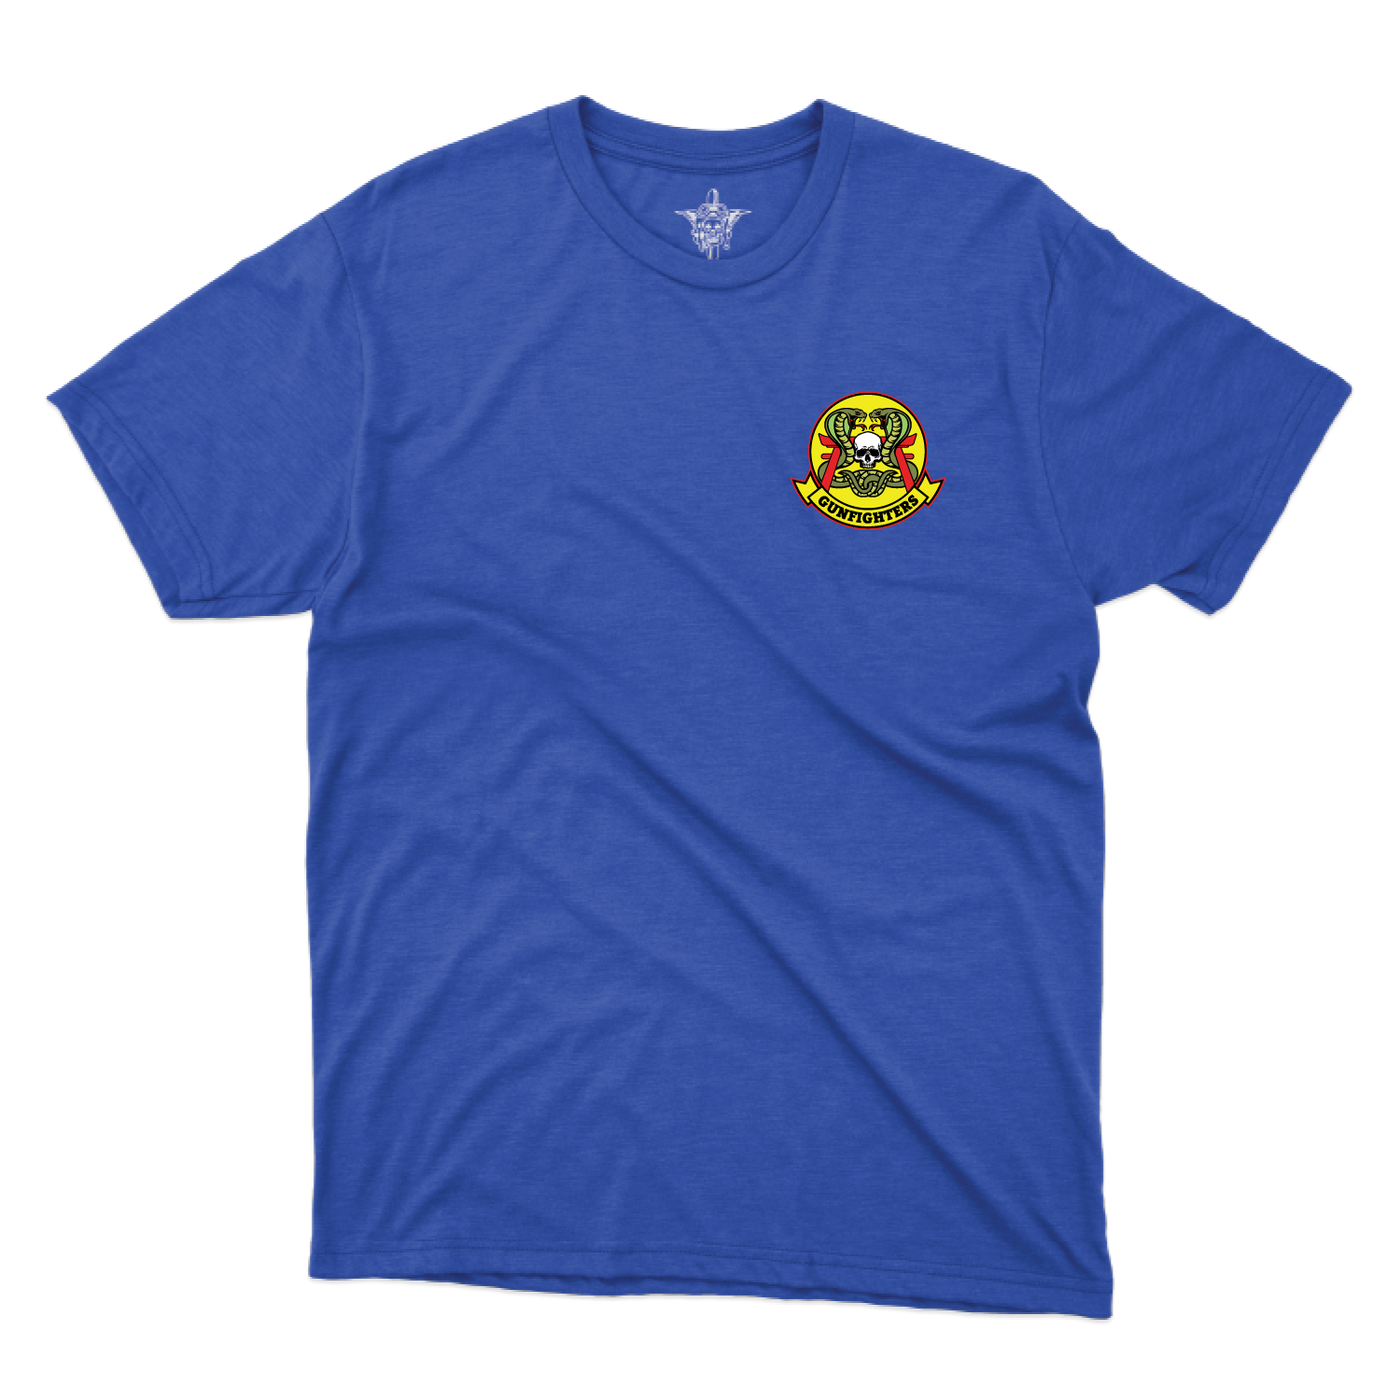 HMLA 369 "Gunfighters" T-Shirts